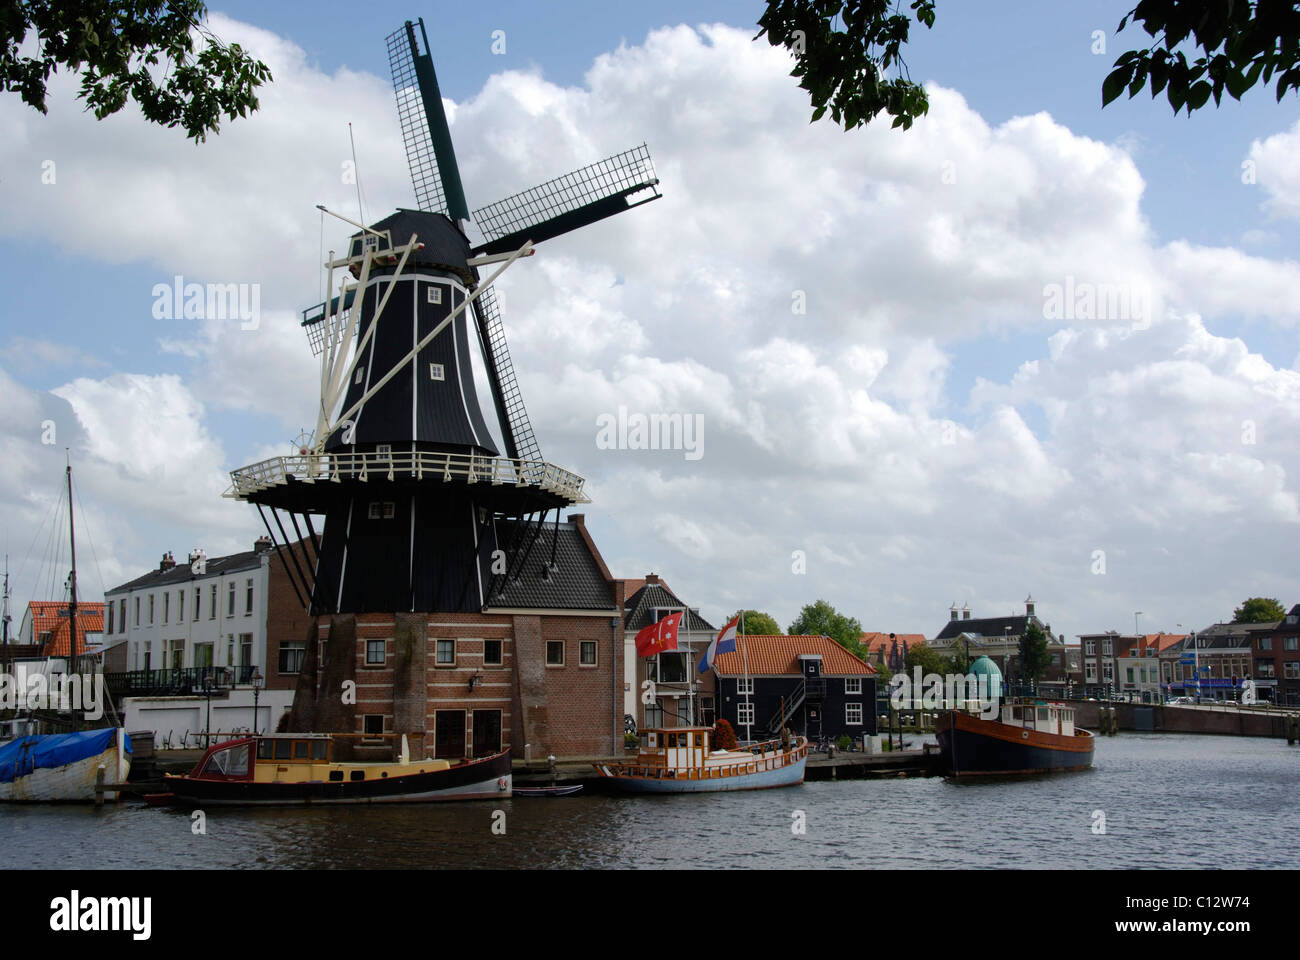 Canal de Haarlem et de Adriaan moulin, Hollande Banque D'Images